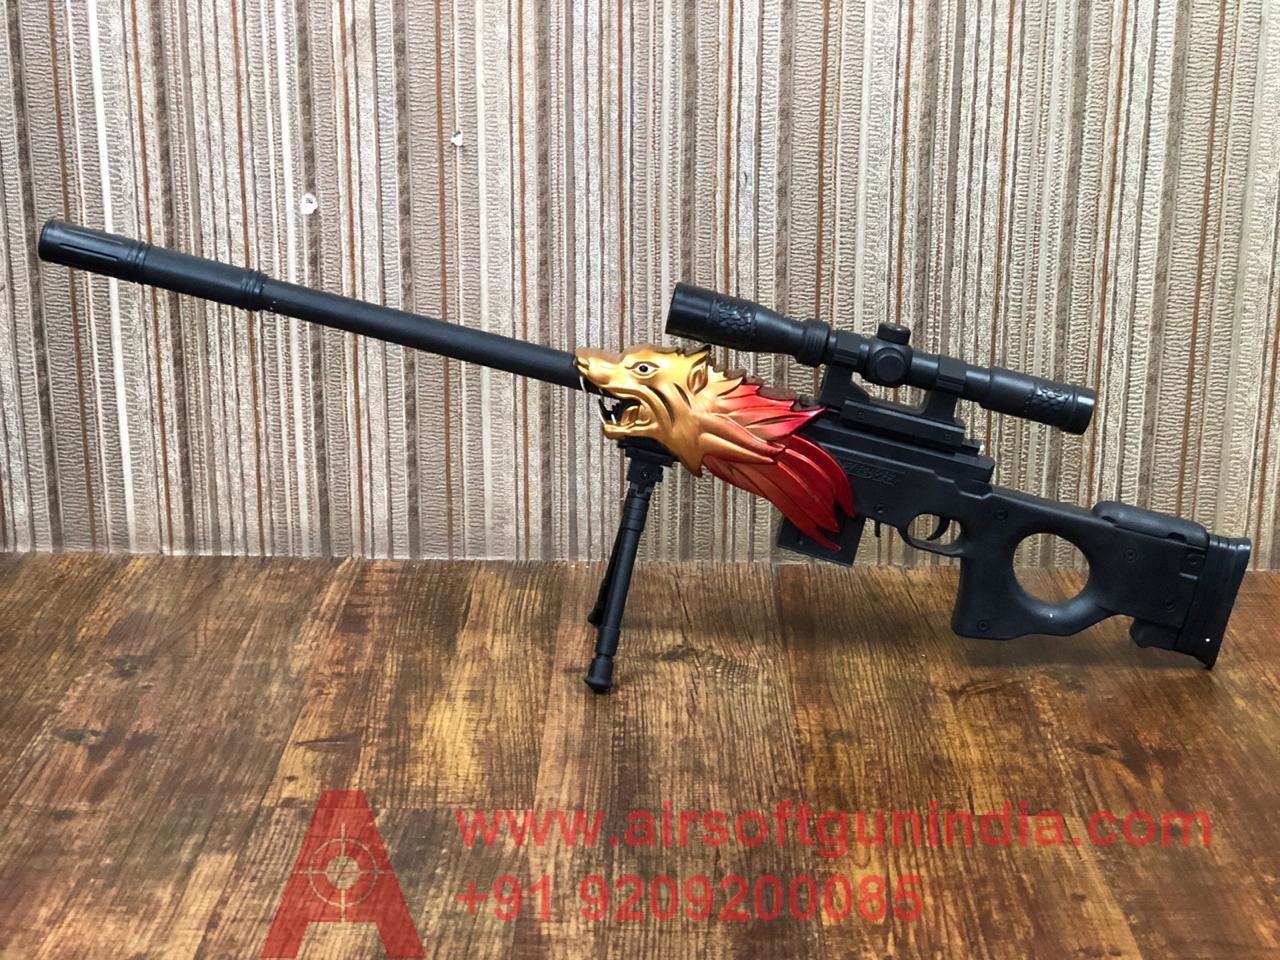 L96 Lion Sniper Rifle By Airsoft Gun India